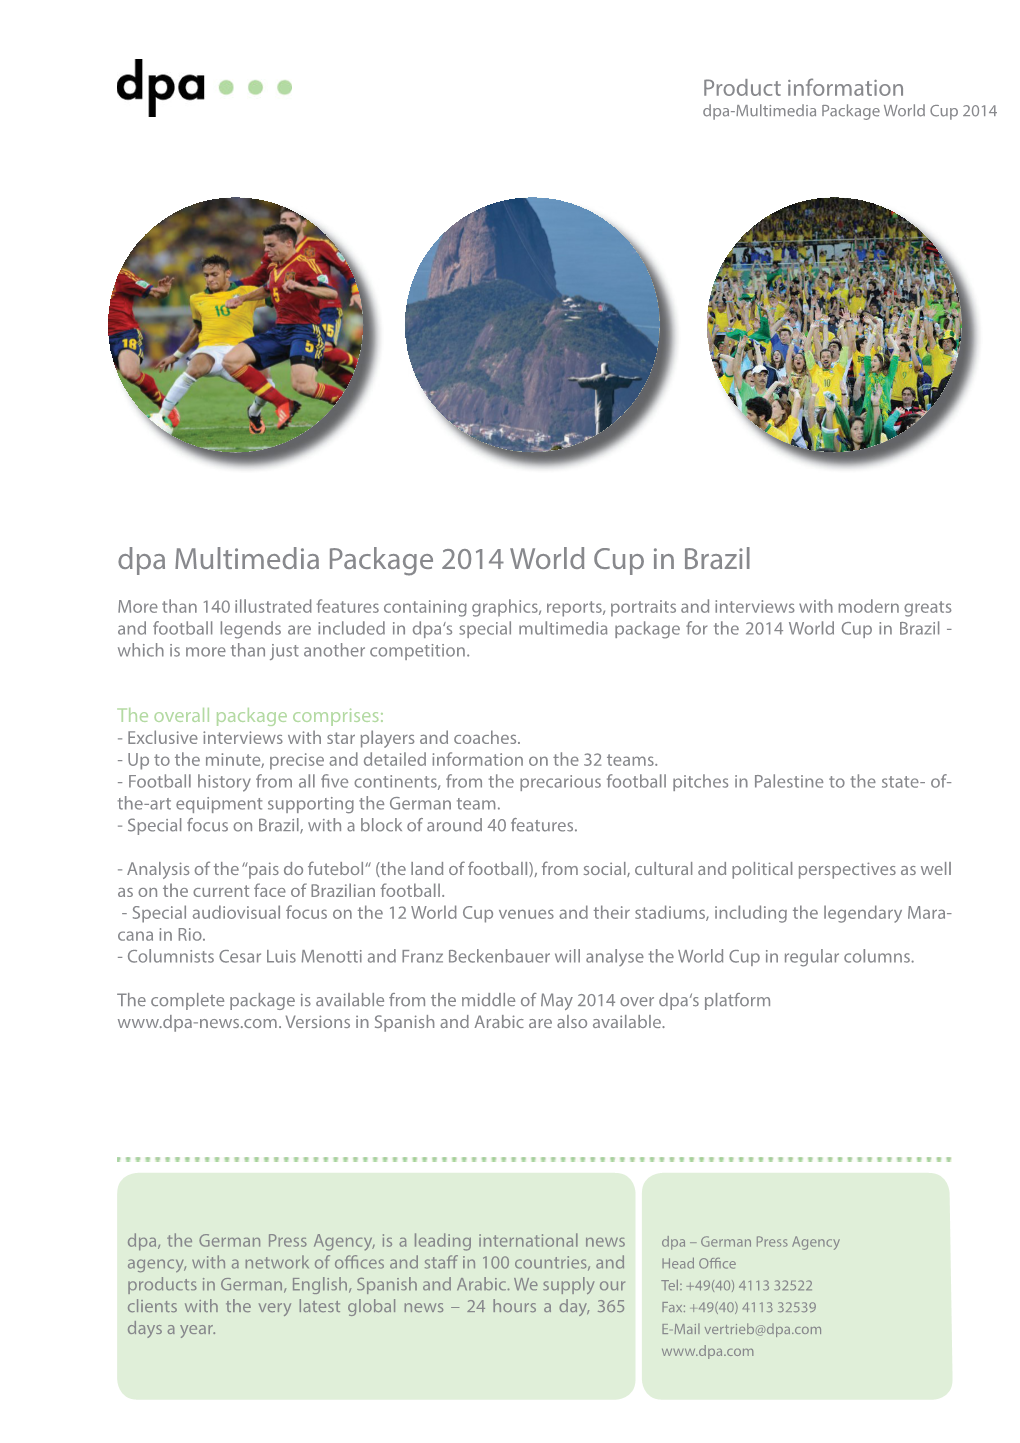 Dpa Multimedia Package 2014 World Cup in Brazil